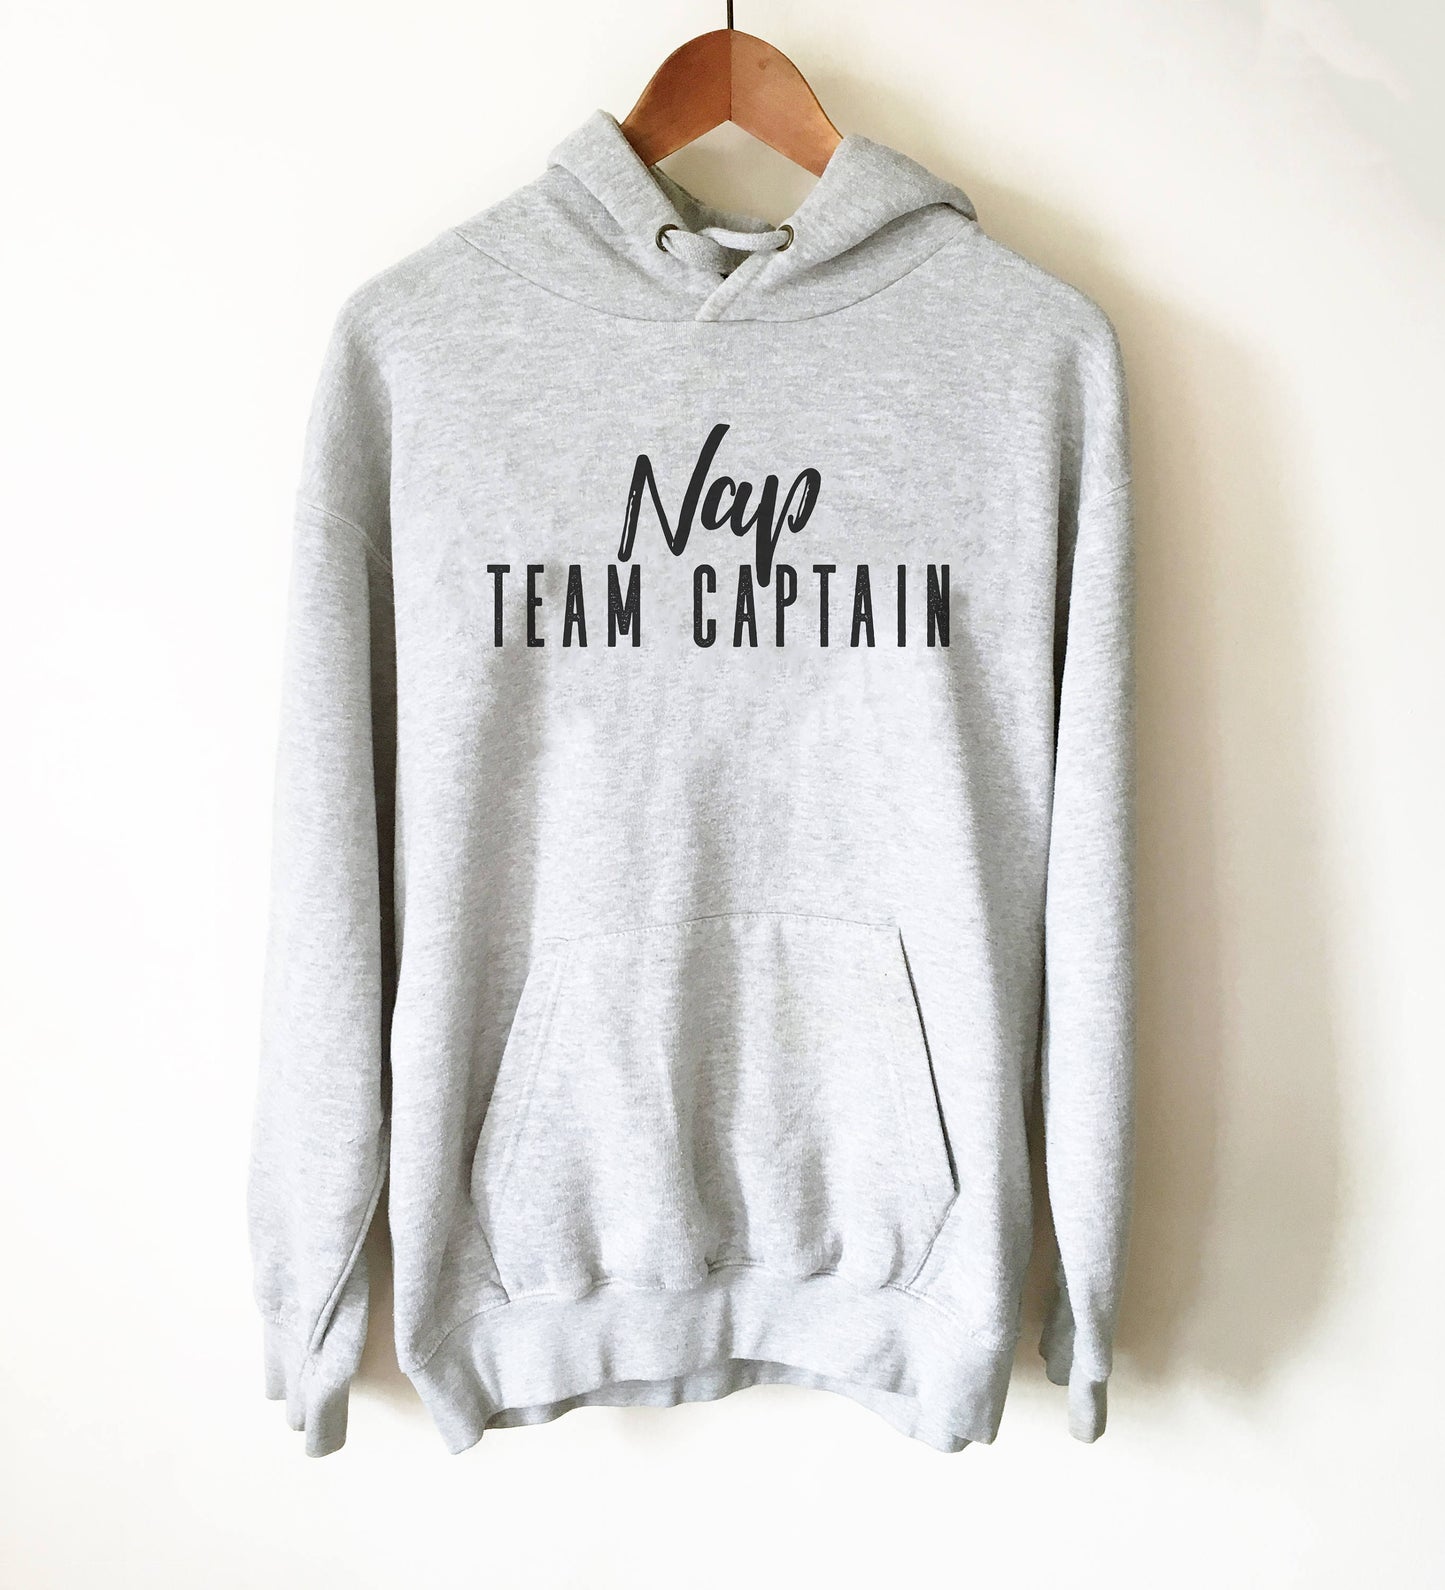 Nap Team Captain Hoodie - Nap shirt | Lazy girl shirts | Lazy day tshirt | Lazy day shirt | Brunch shirt